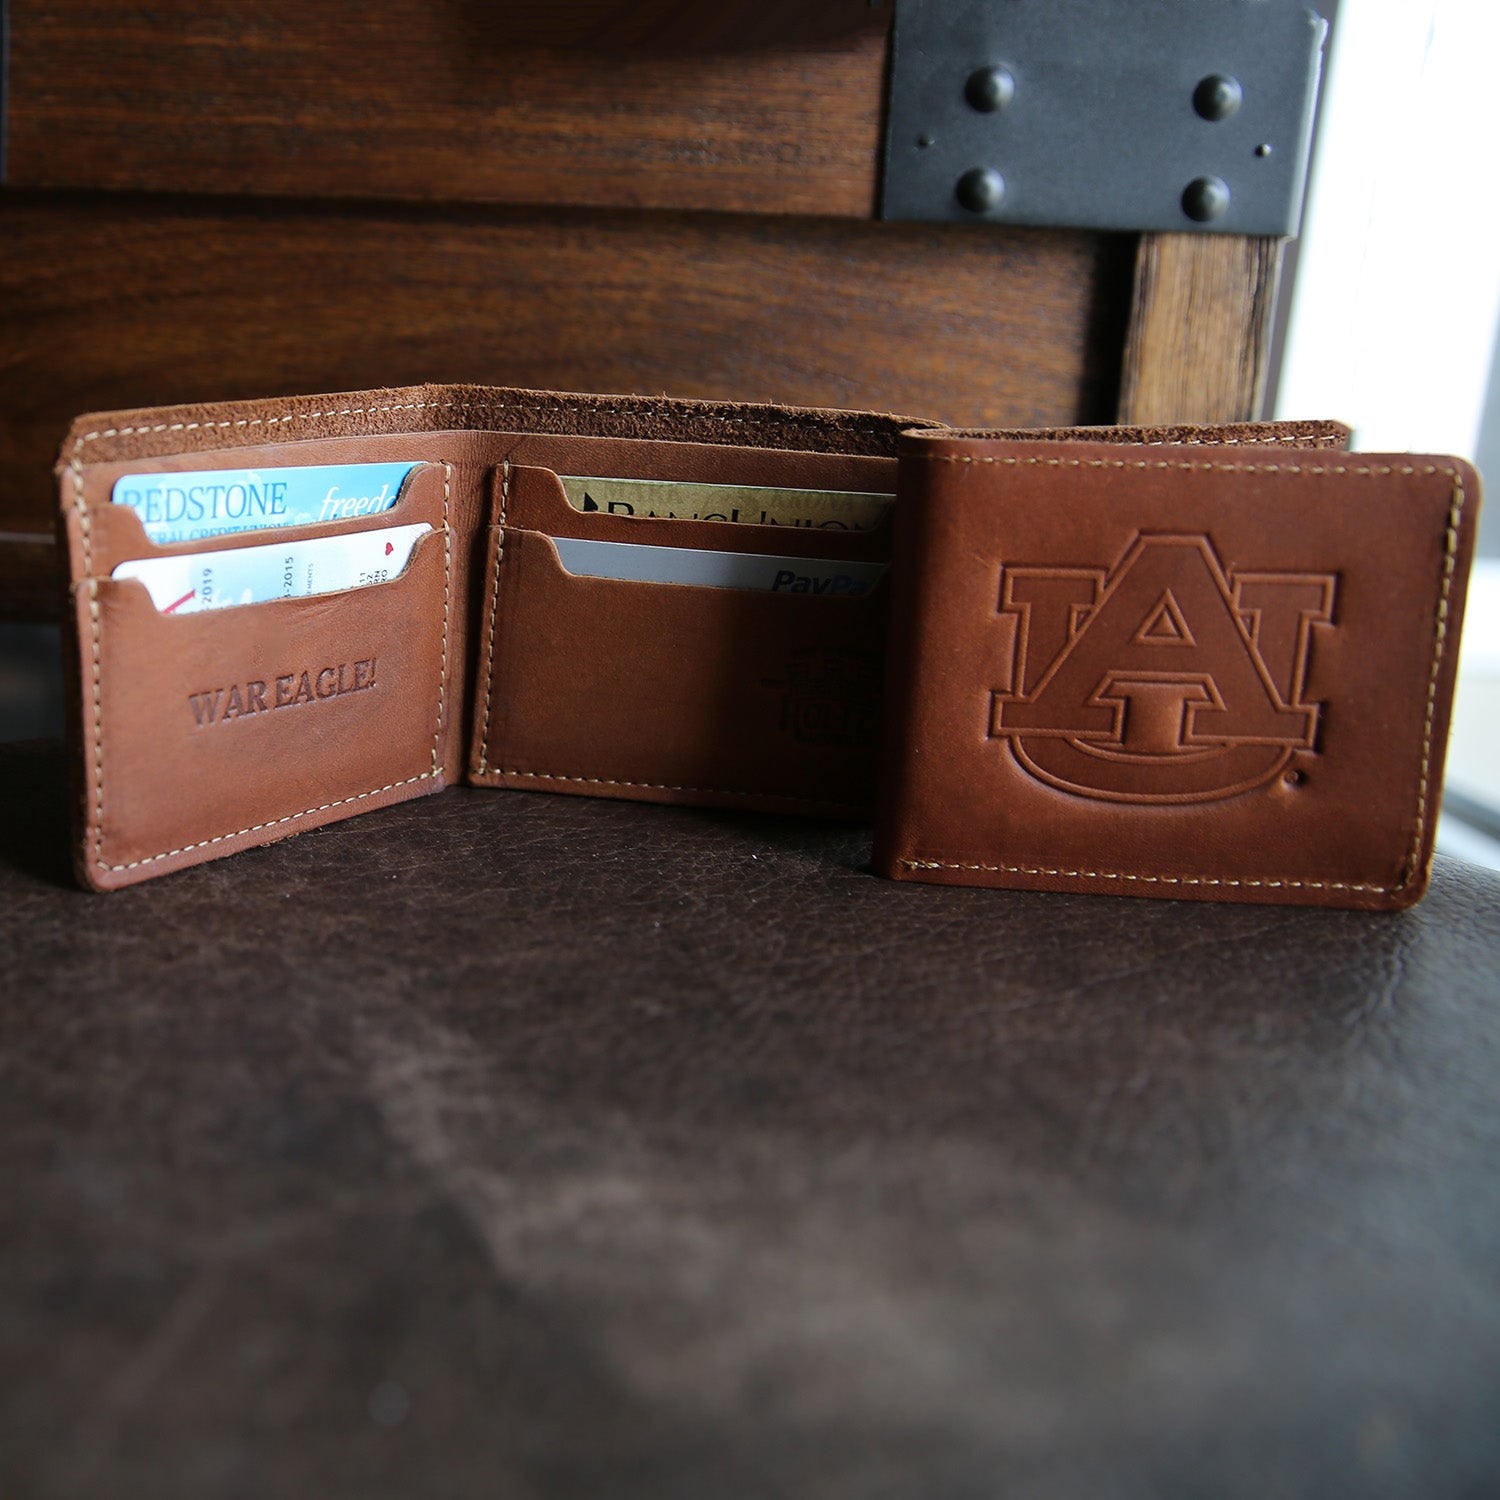 Fine leather bifold wallet with Auburn University logo